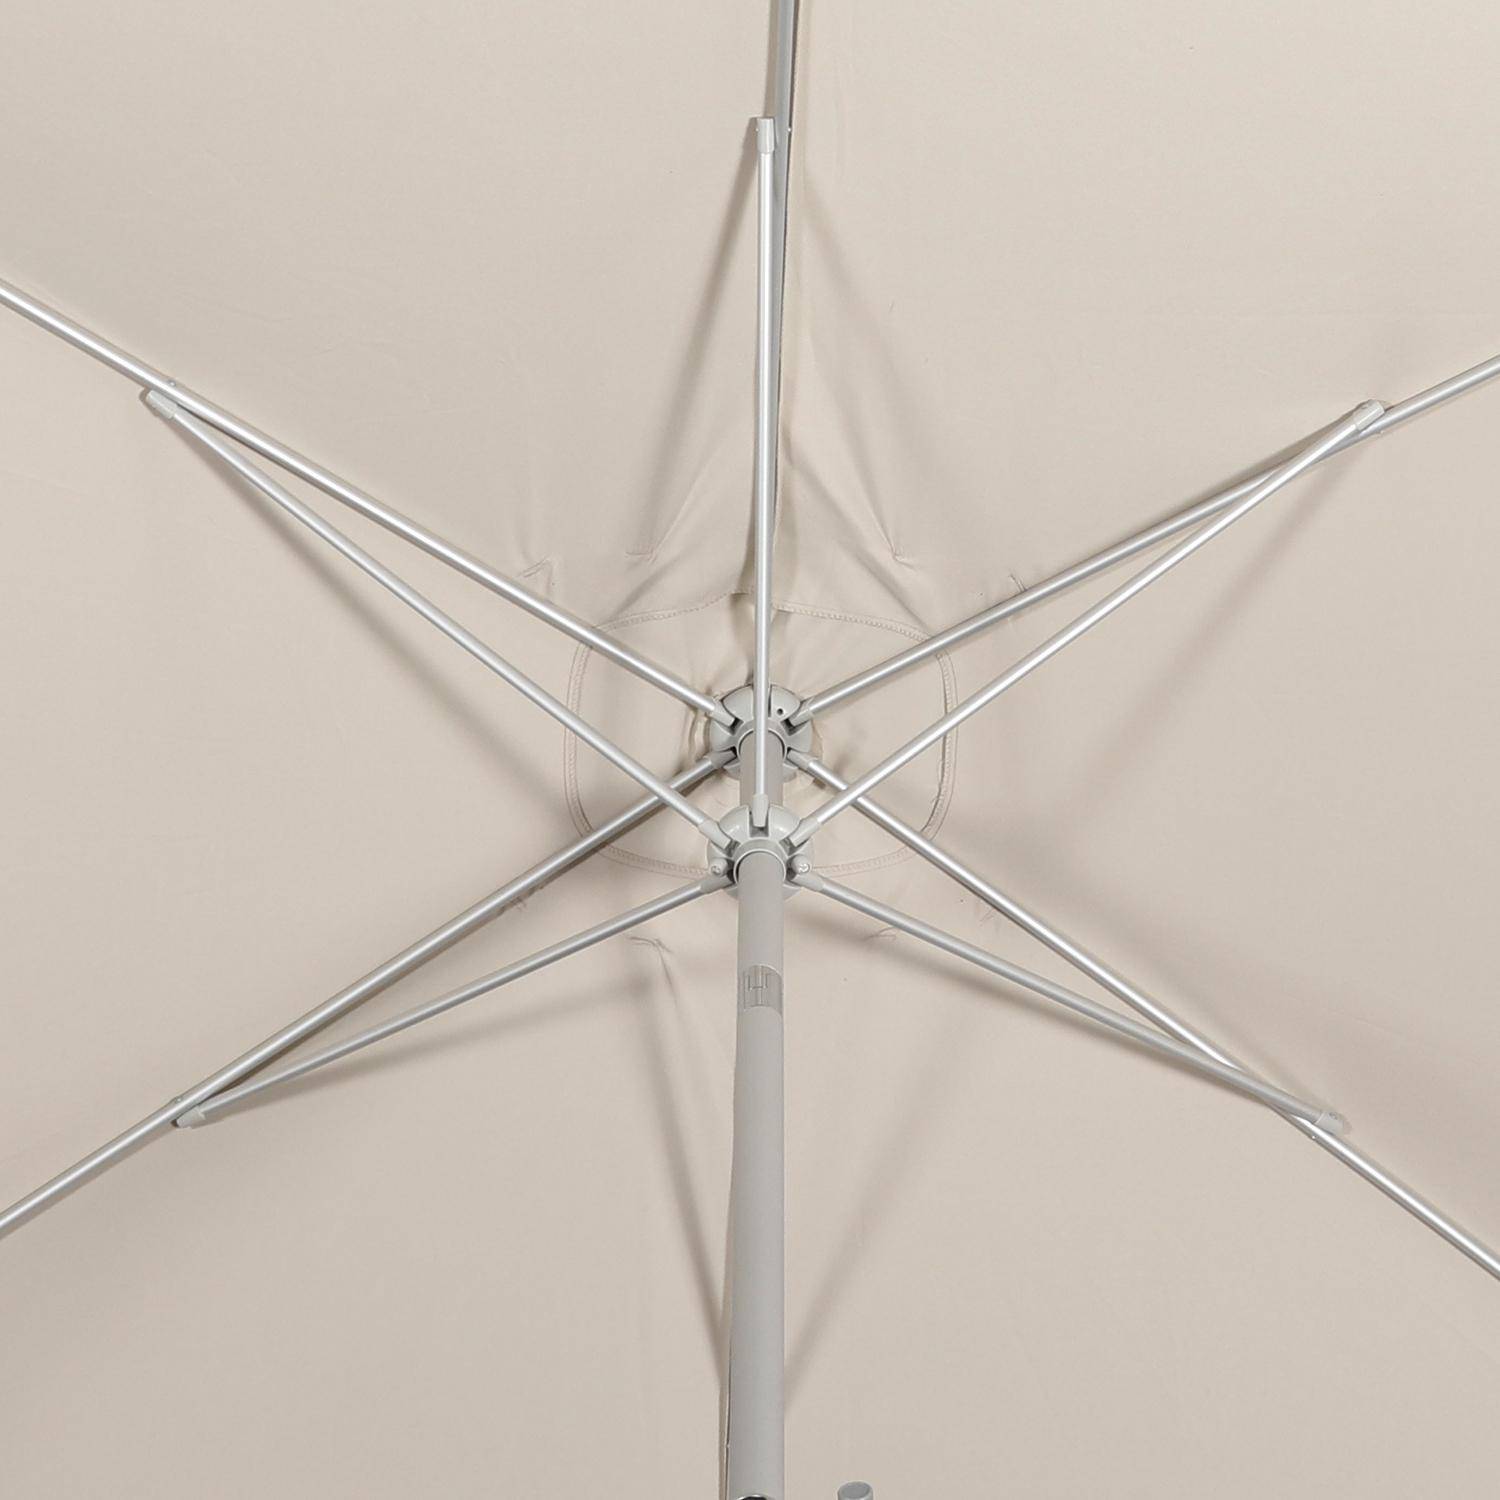 Stokparasol Wissant, 2x3m, grijs, geanodiseerd aluminium, openingshendel , 2x3m, zand Photo8